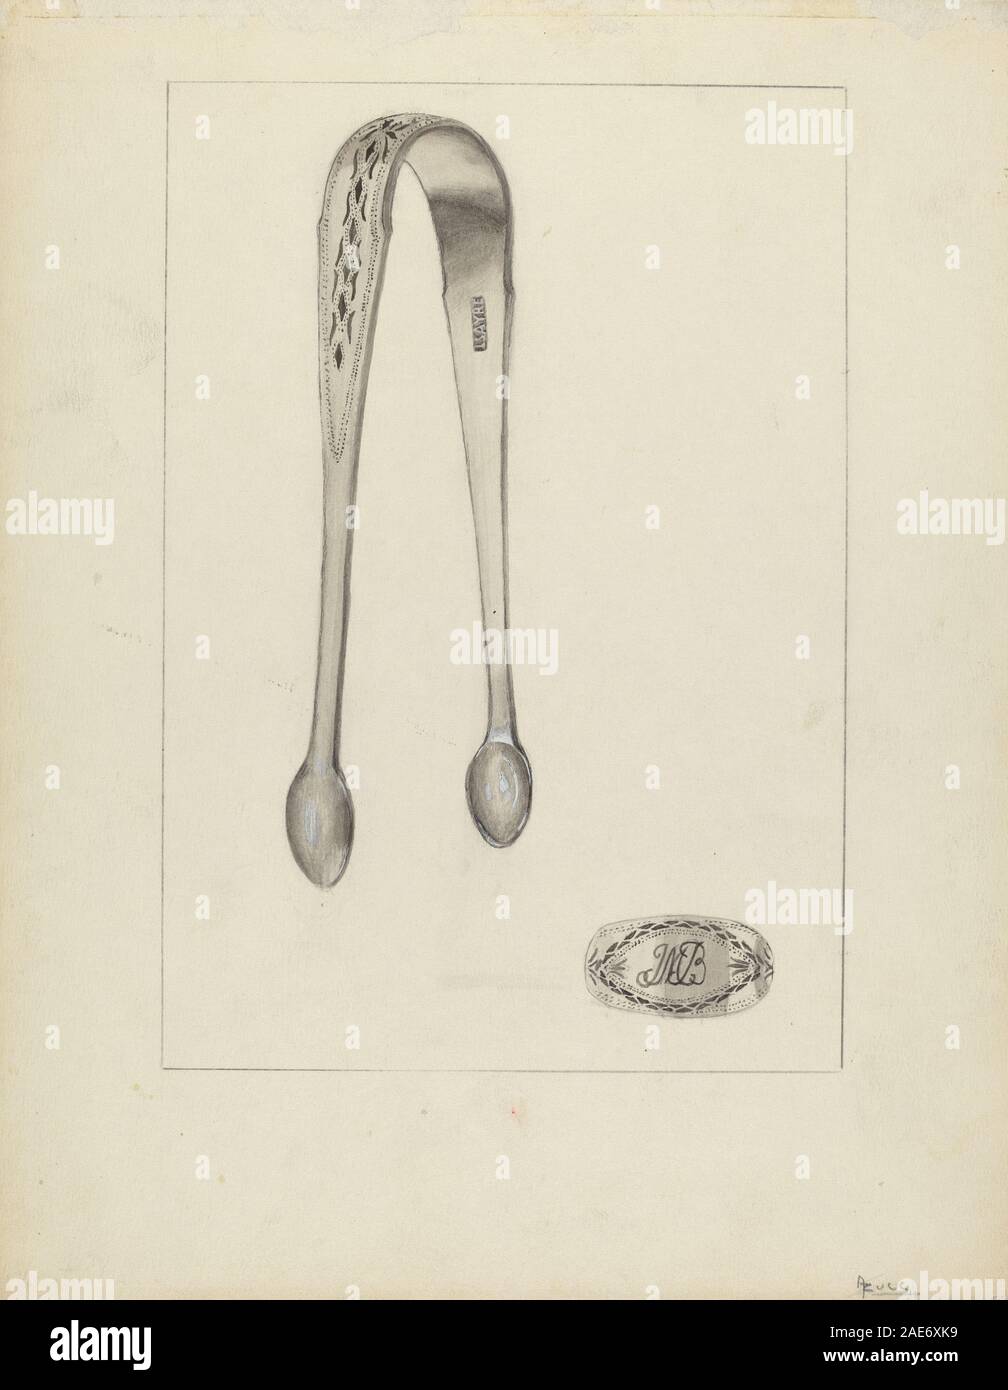 Silver pinze da zucchero; 1935/1942 Anthony Zuccarello, argento pinze da zucchero, 1935-1942 Foto Stock